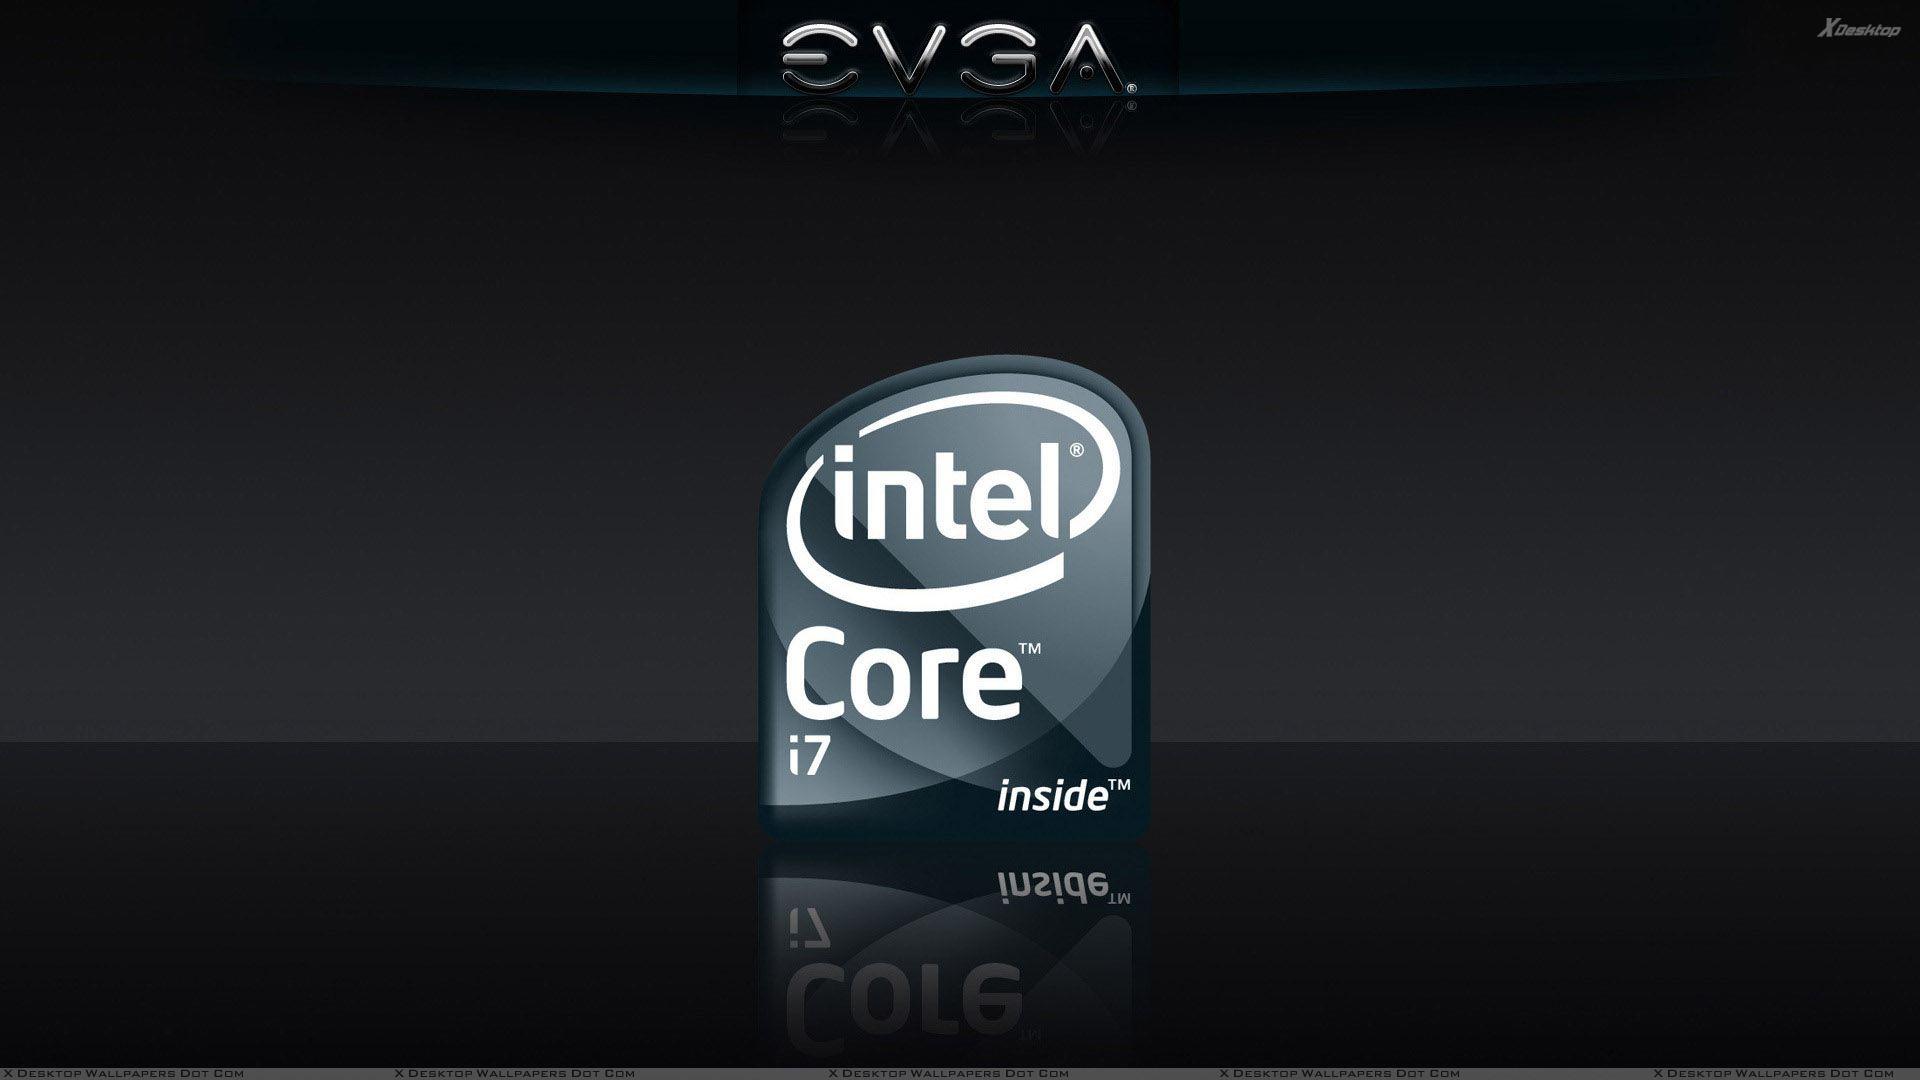 EVGA Intel Core i7 And Black Background Wallpaper